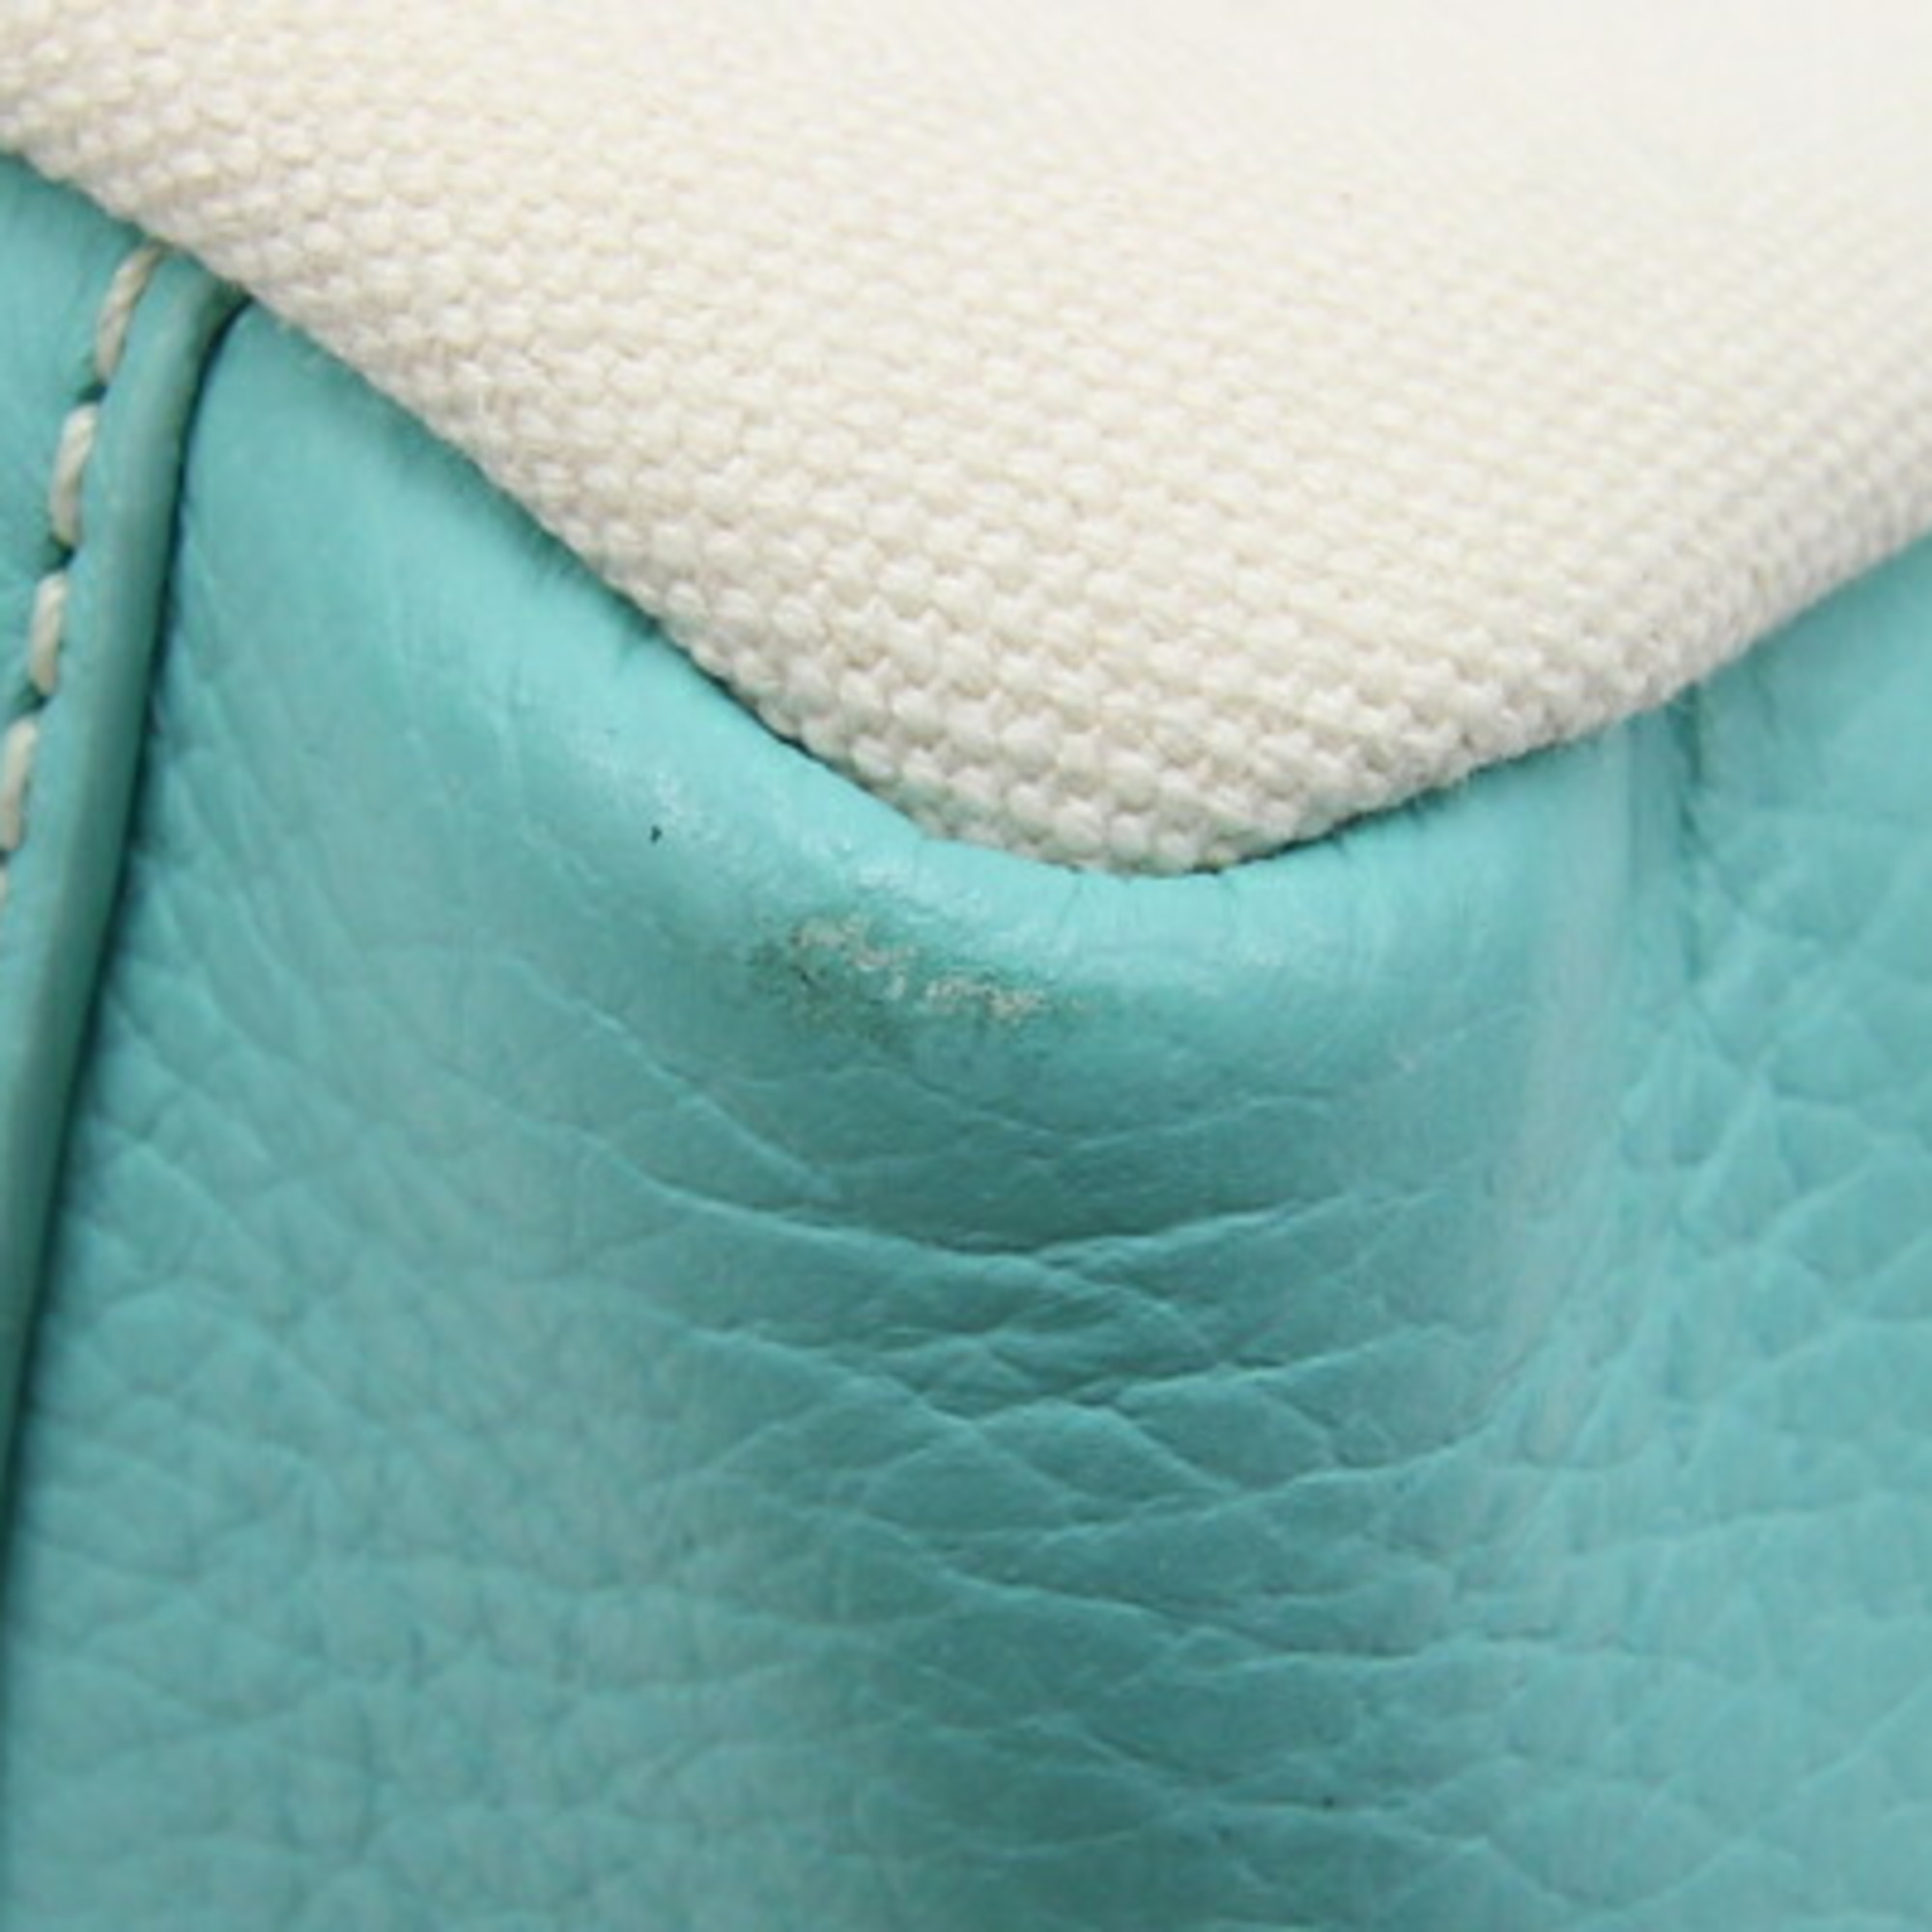 Tiffany Tote Bag Blue Ivory Canvas Leather Handbag Shoulder Women's TIFFANY＆CO